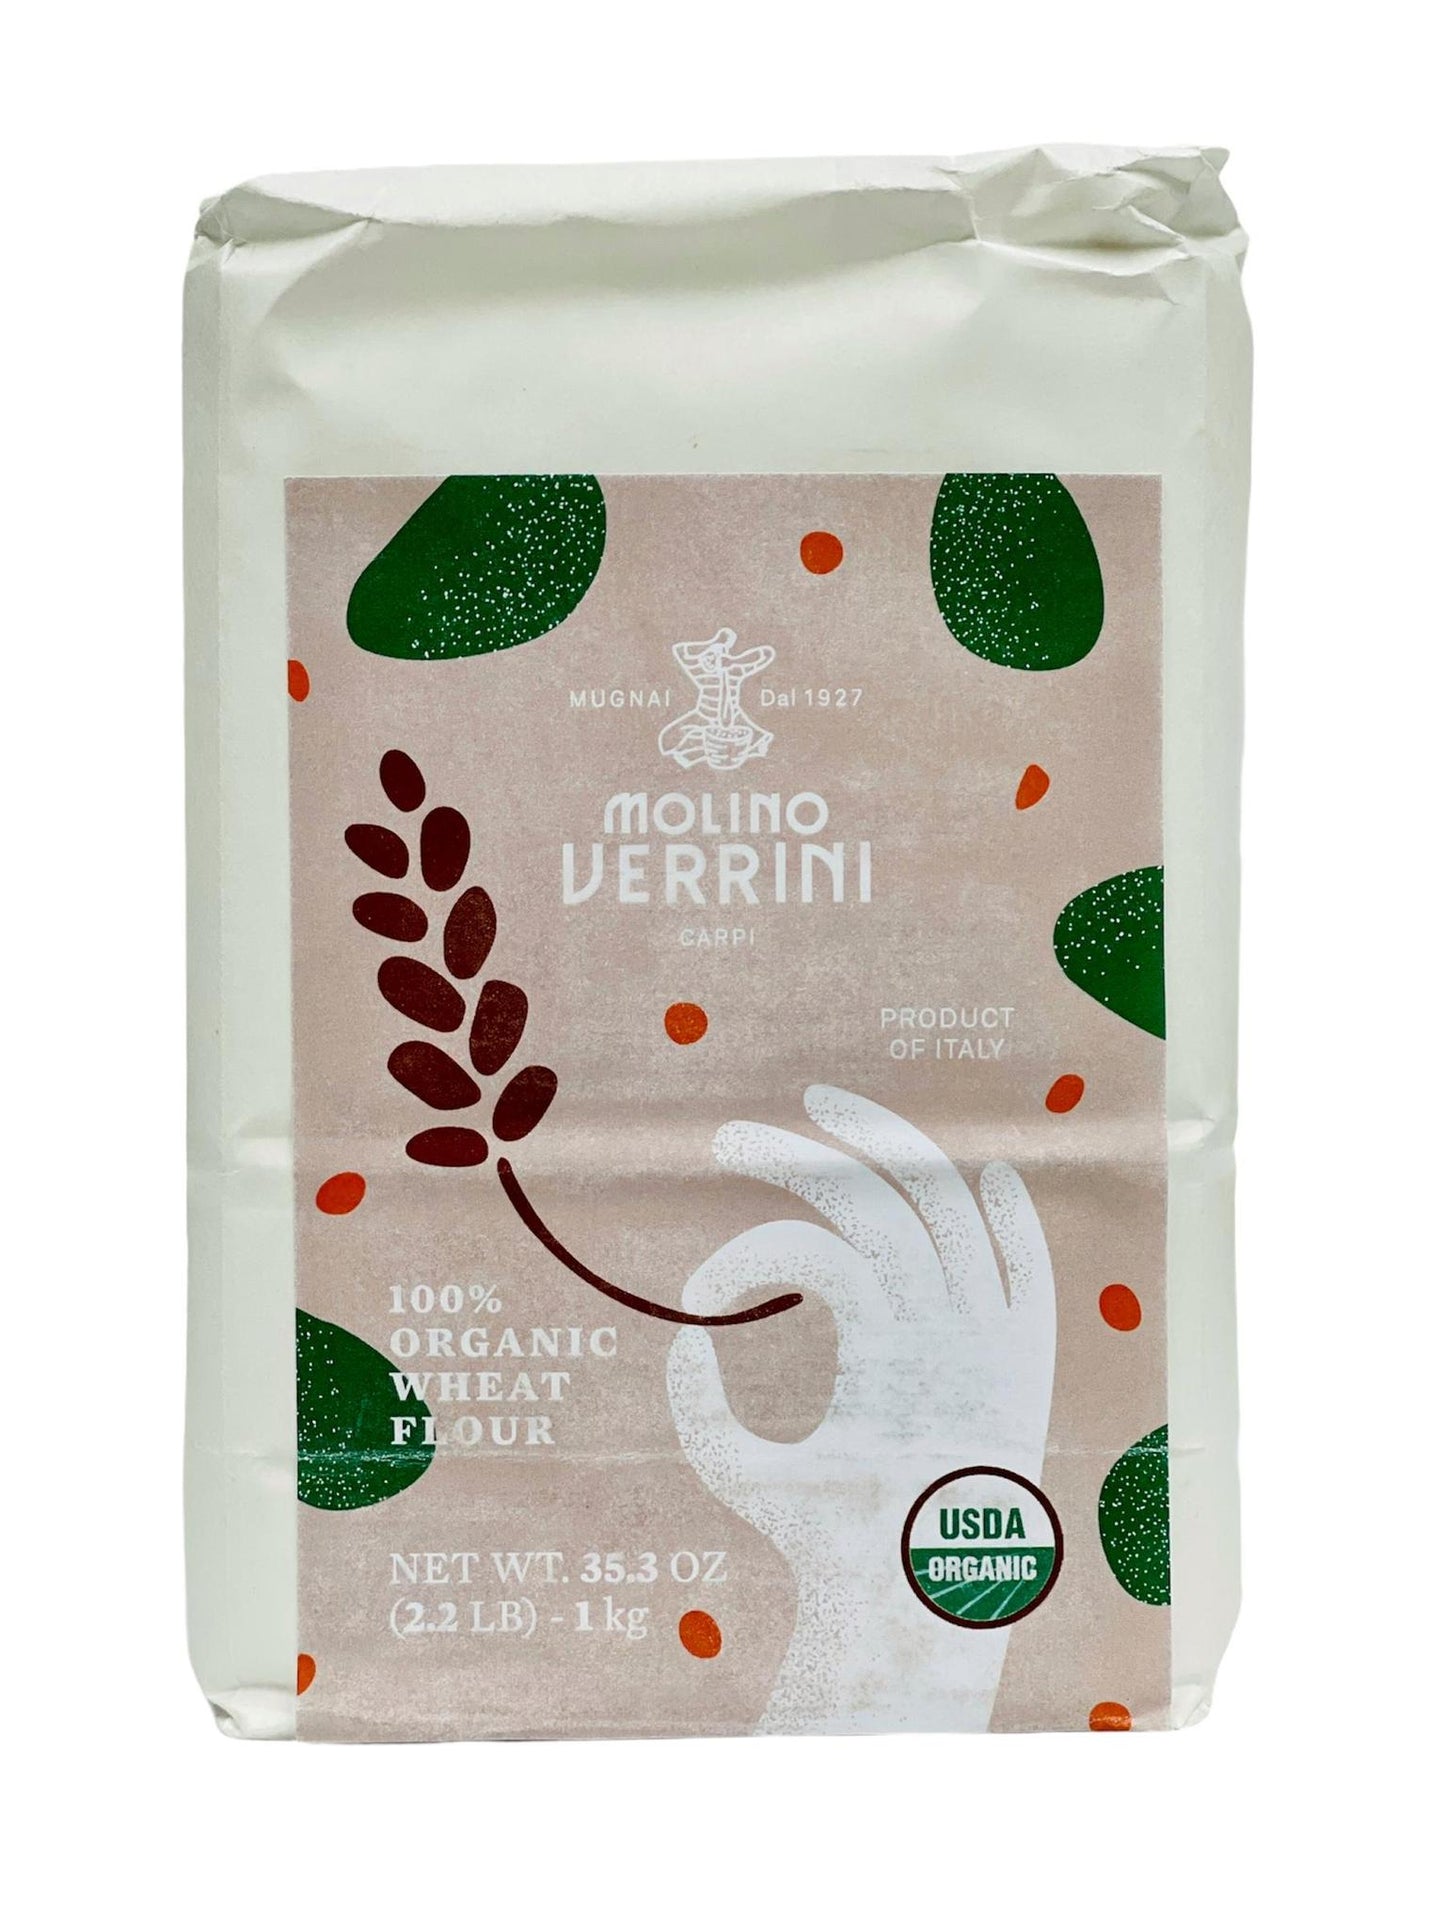 Mulino Verrini 100% Organic Wheat Flour, 35.3 oz